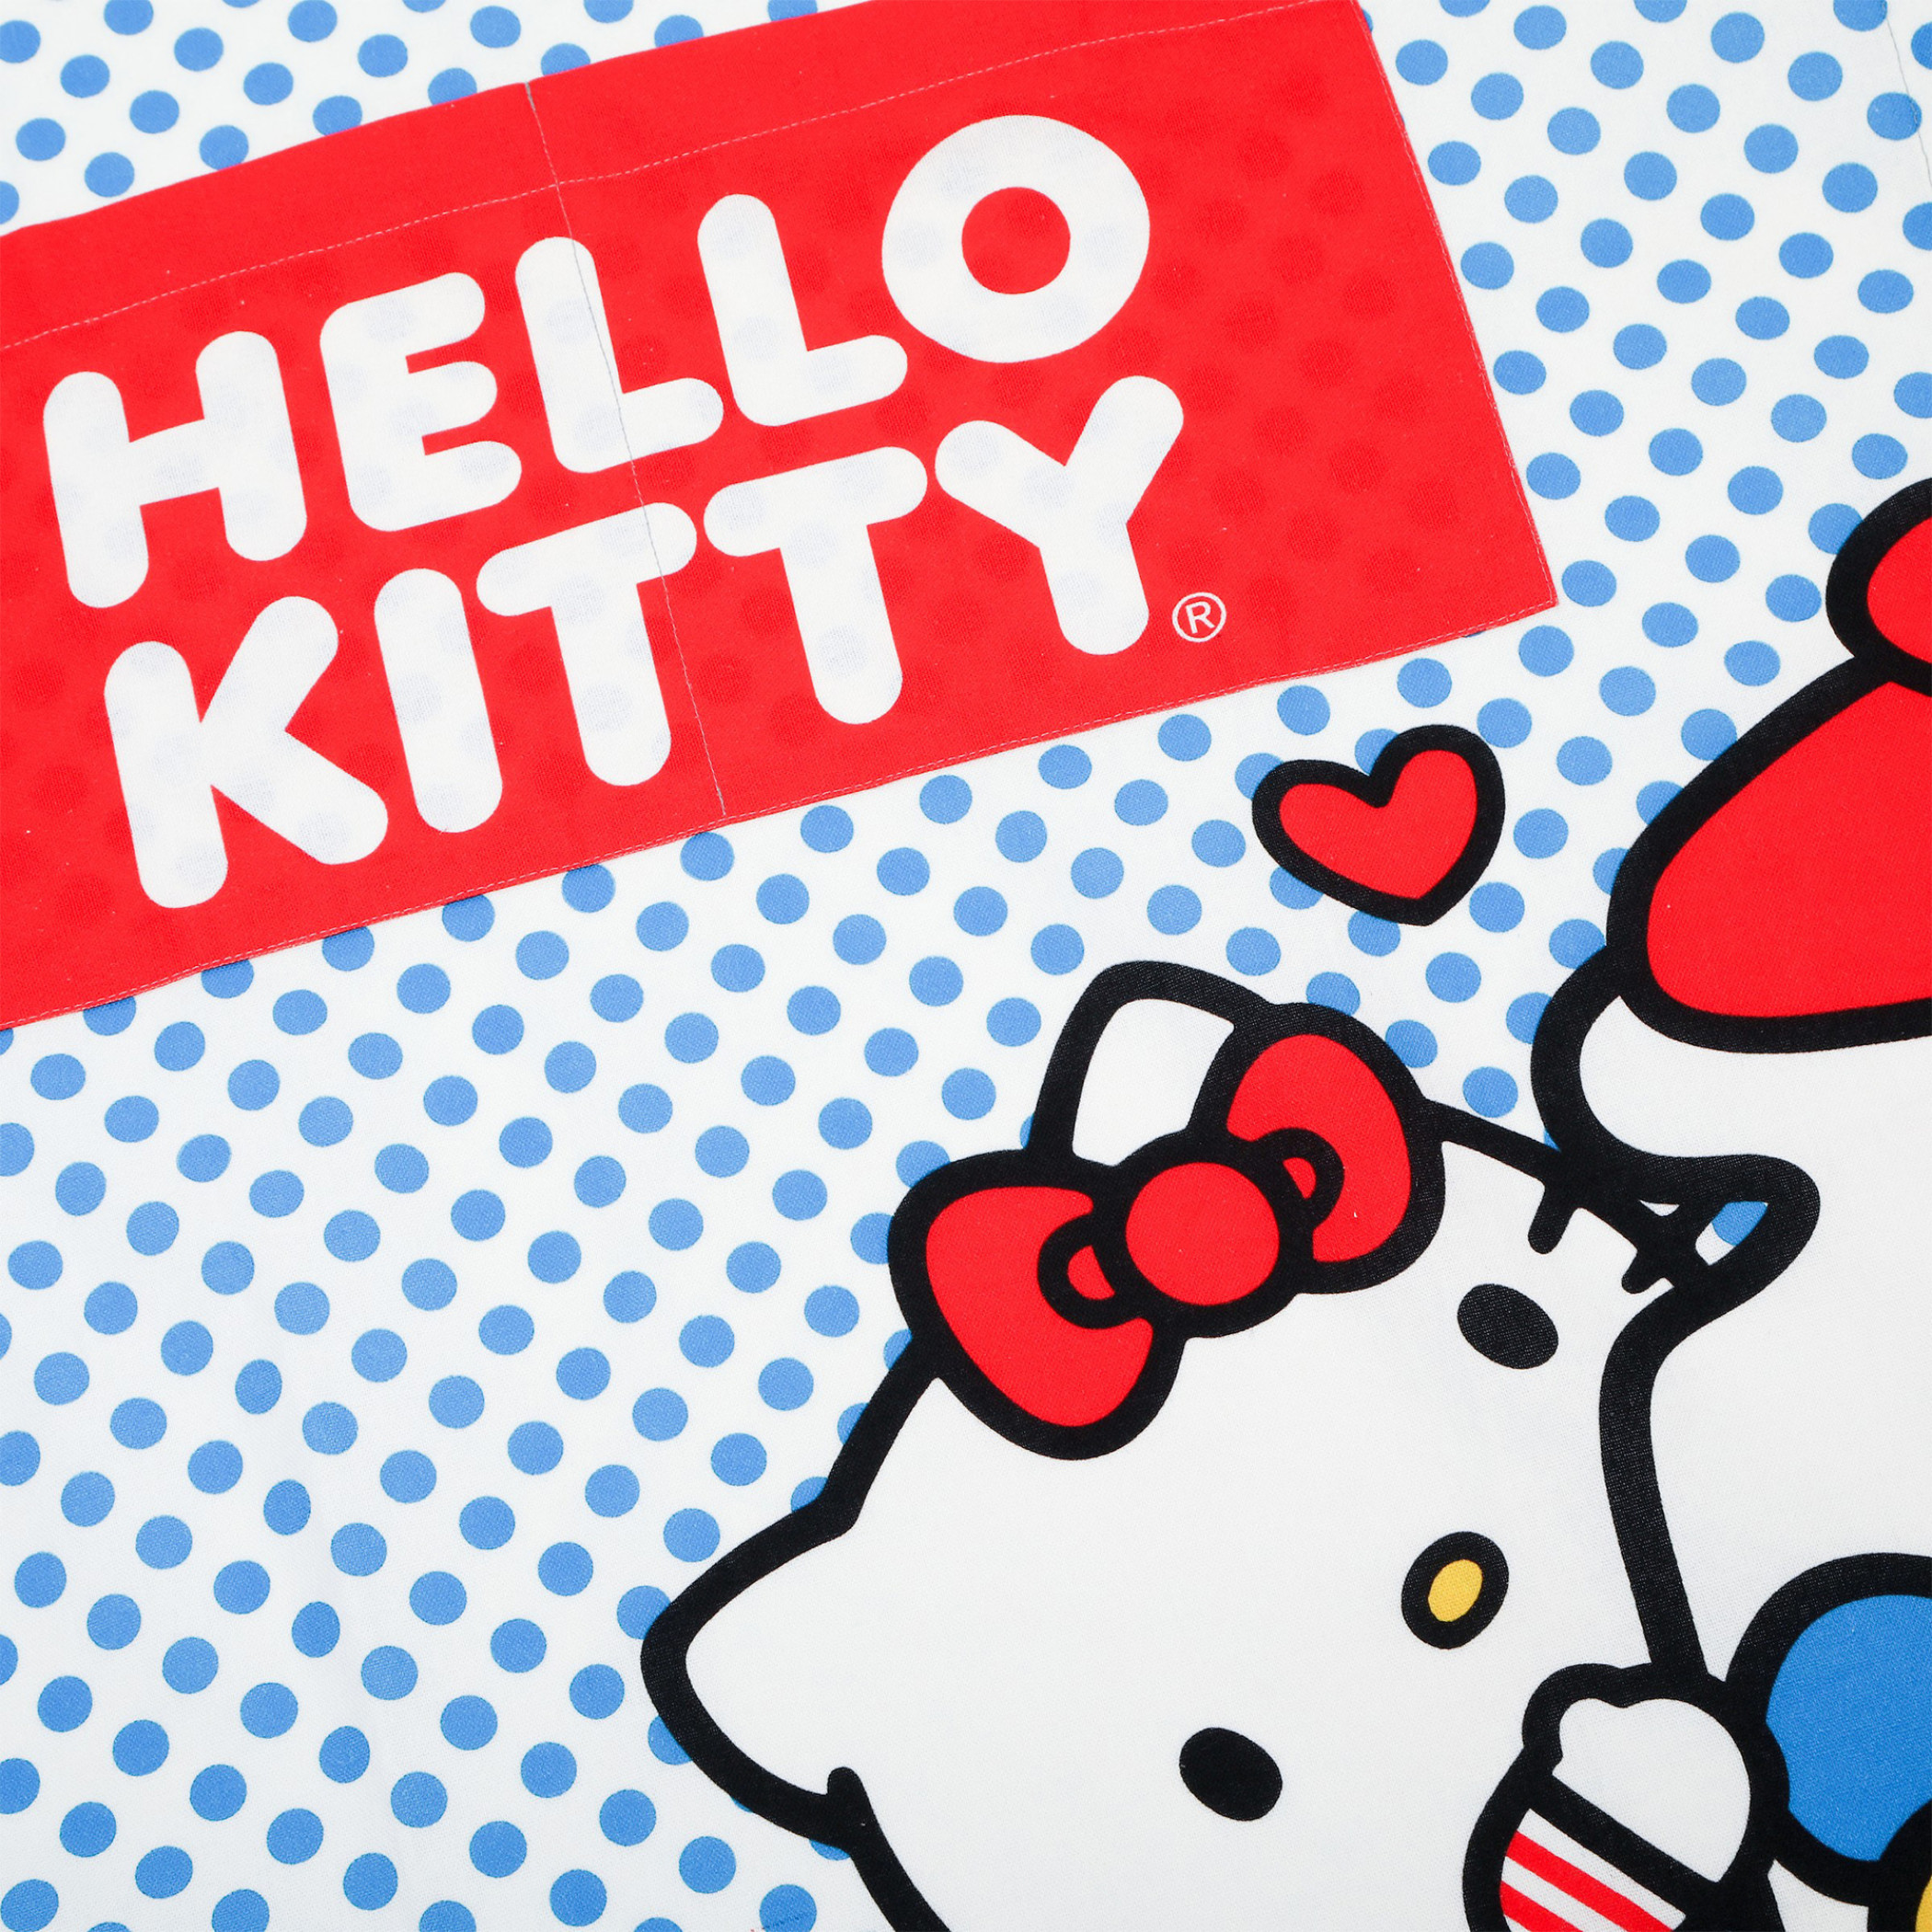 Hello Kitty Sanrio Blue Dotted Apron